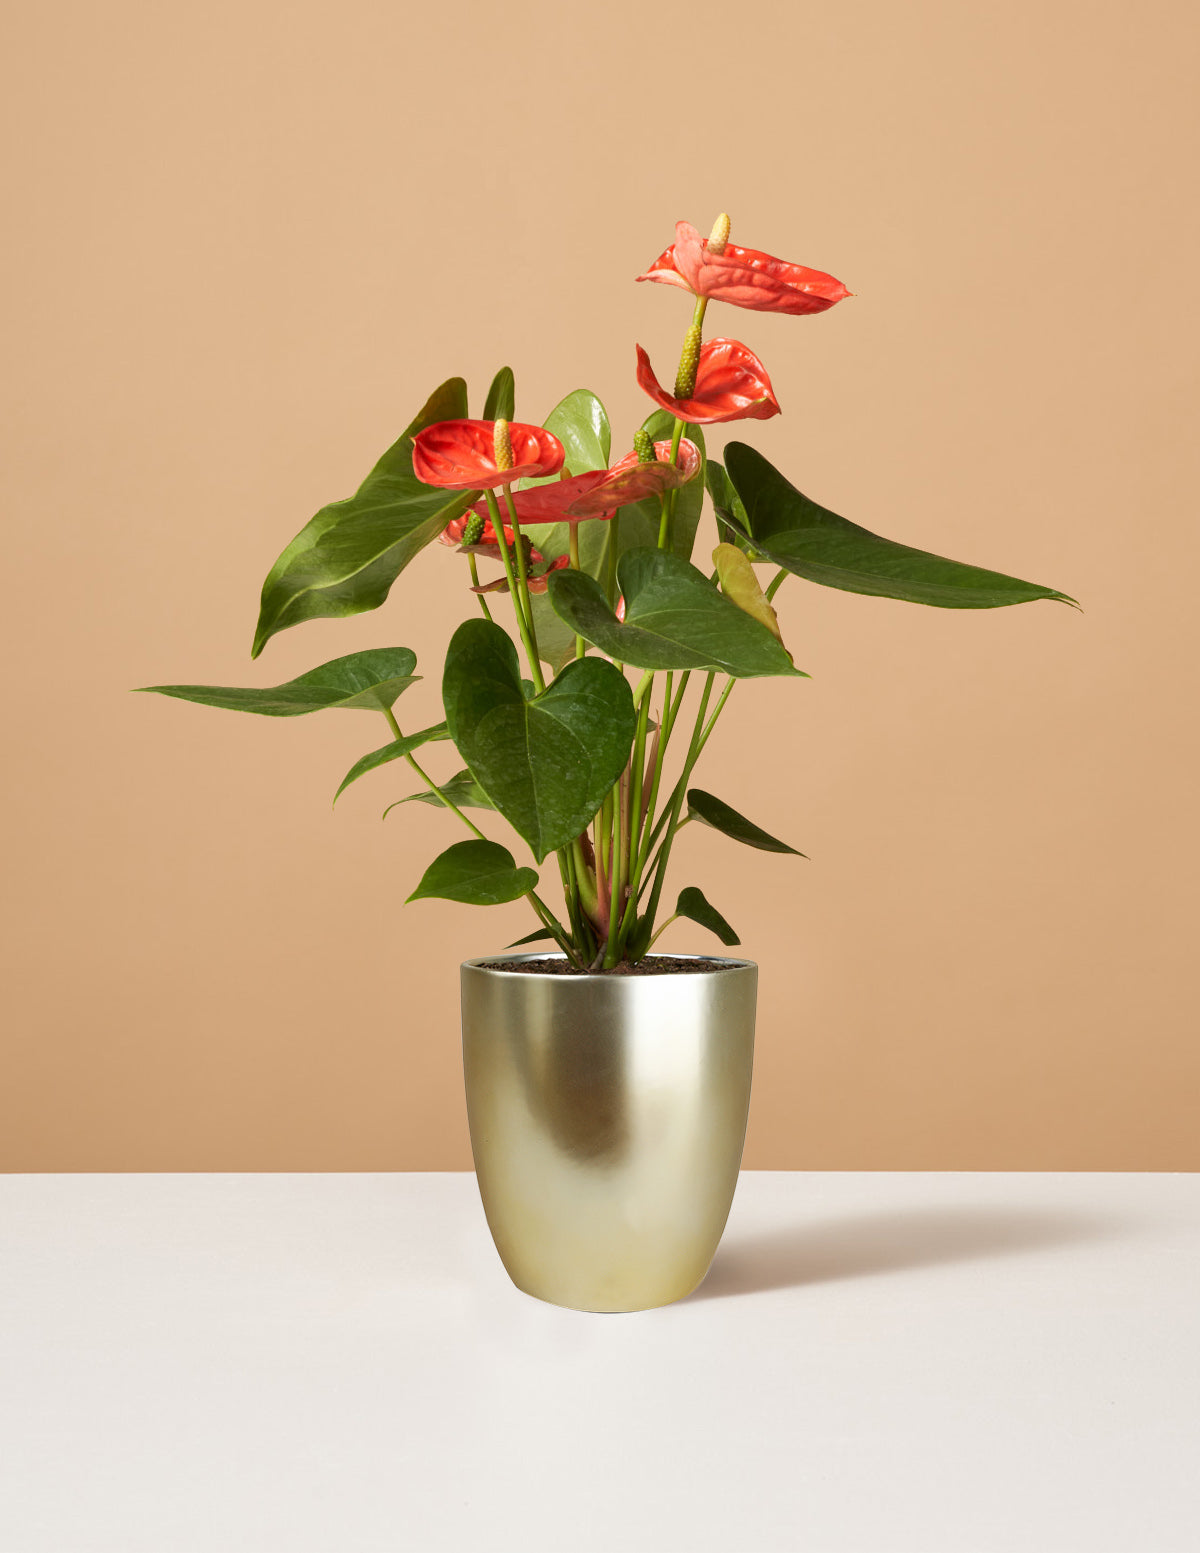 Flowering Houseplants, Shop Online, Delivered To You